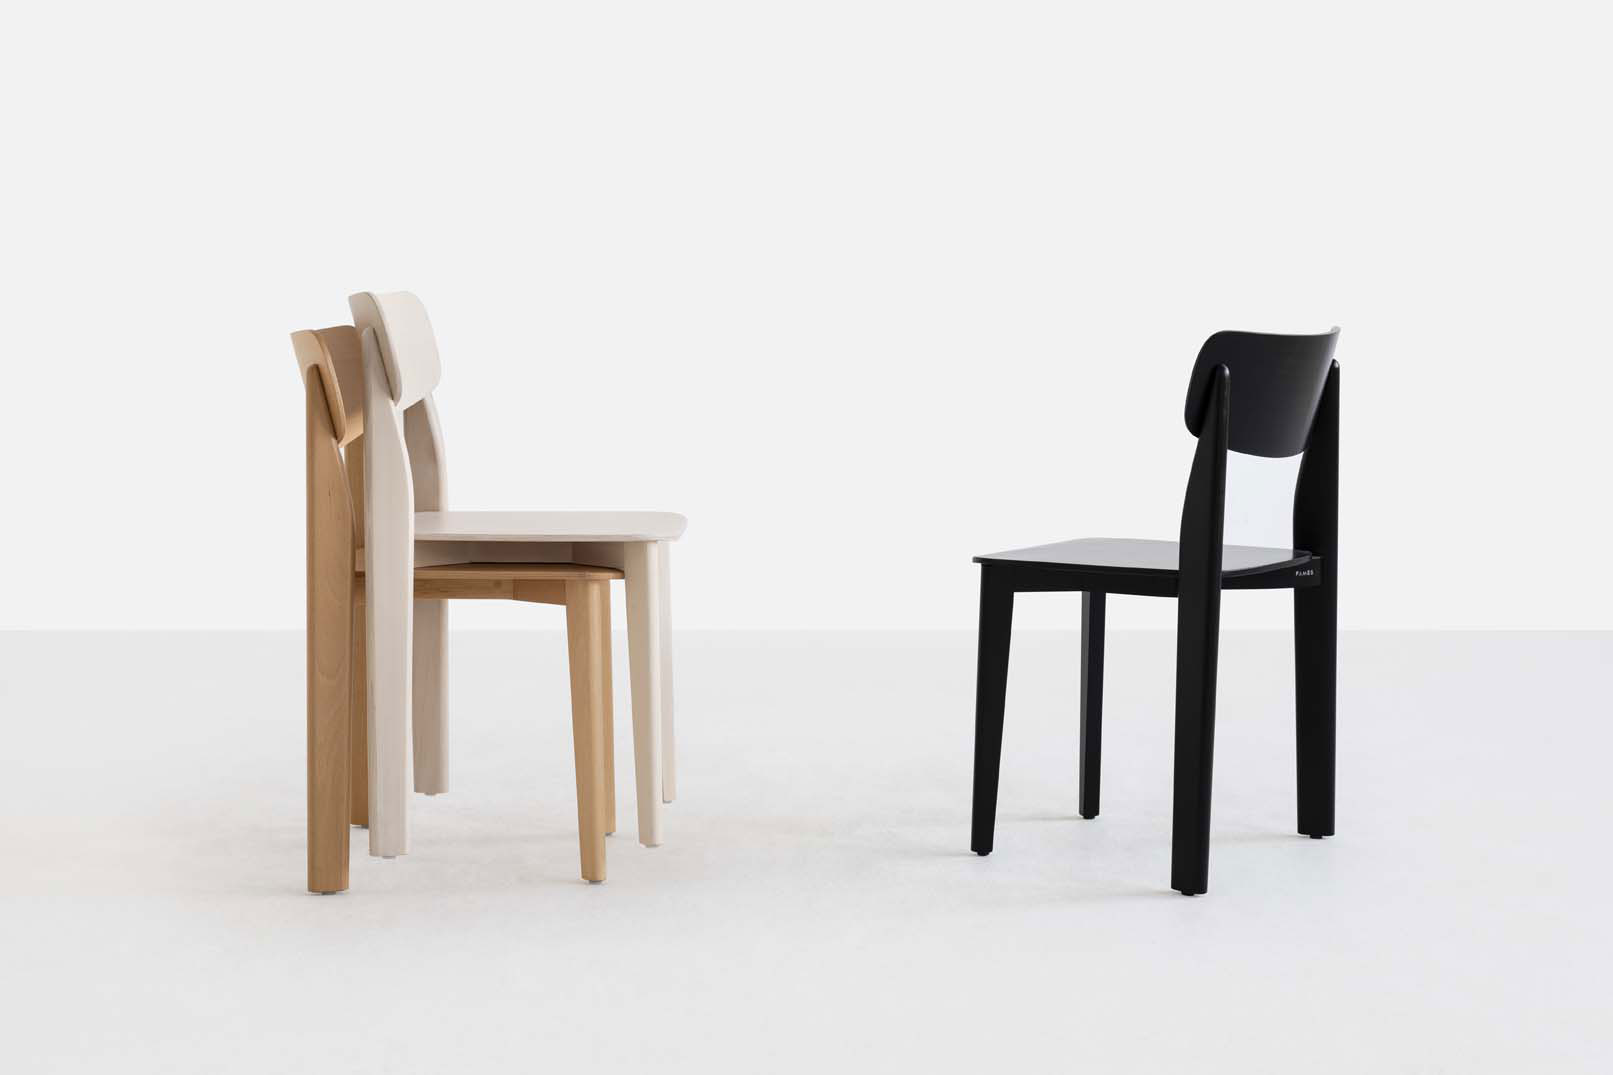 PALA chairs designed by Muka Design Lab for Fameg. Photo by Muka Design Lab